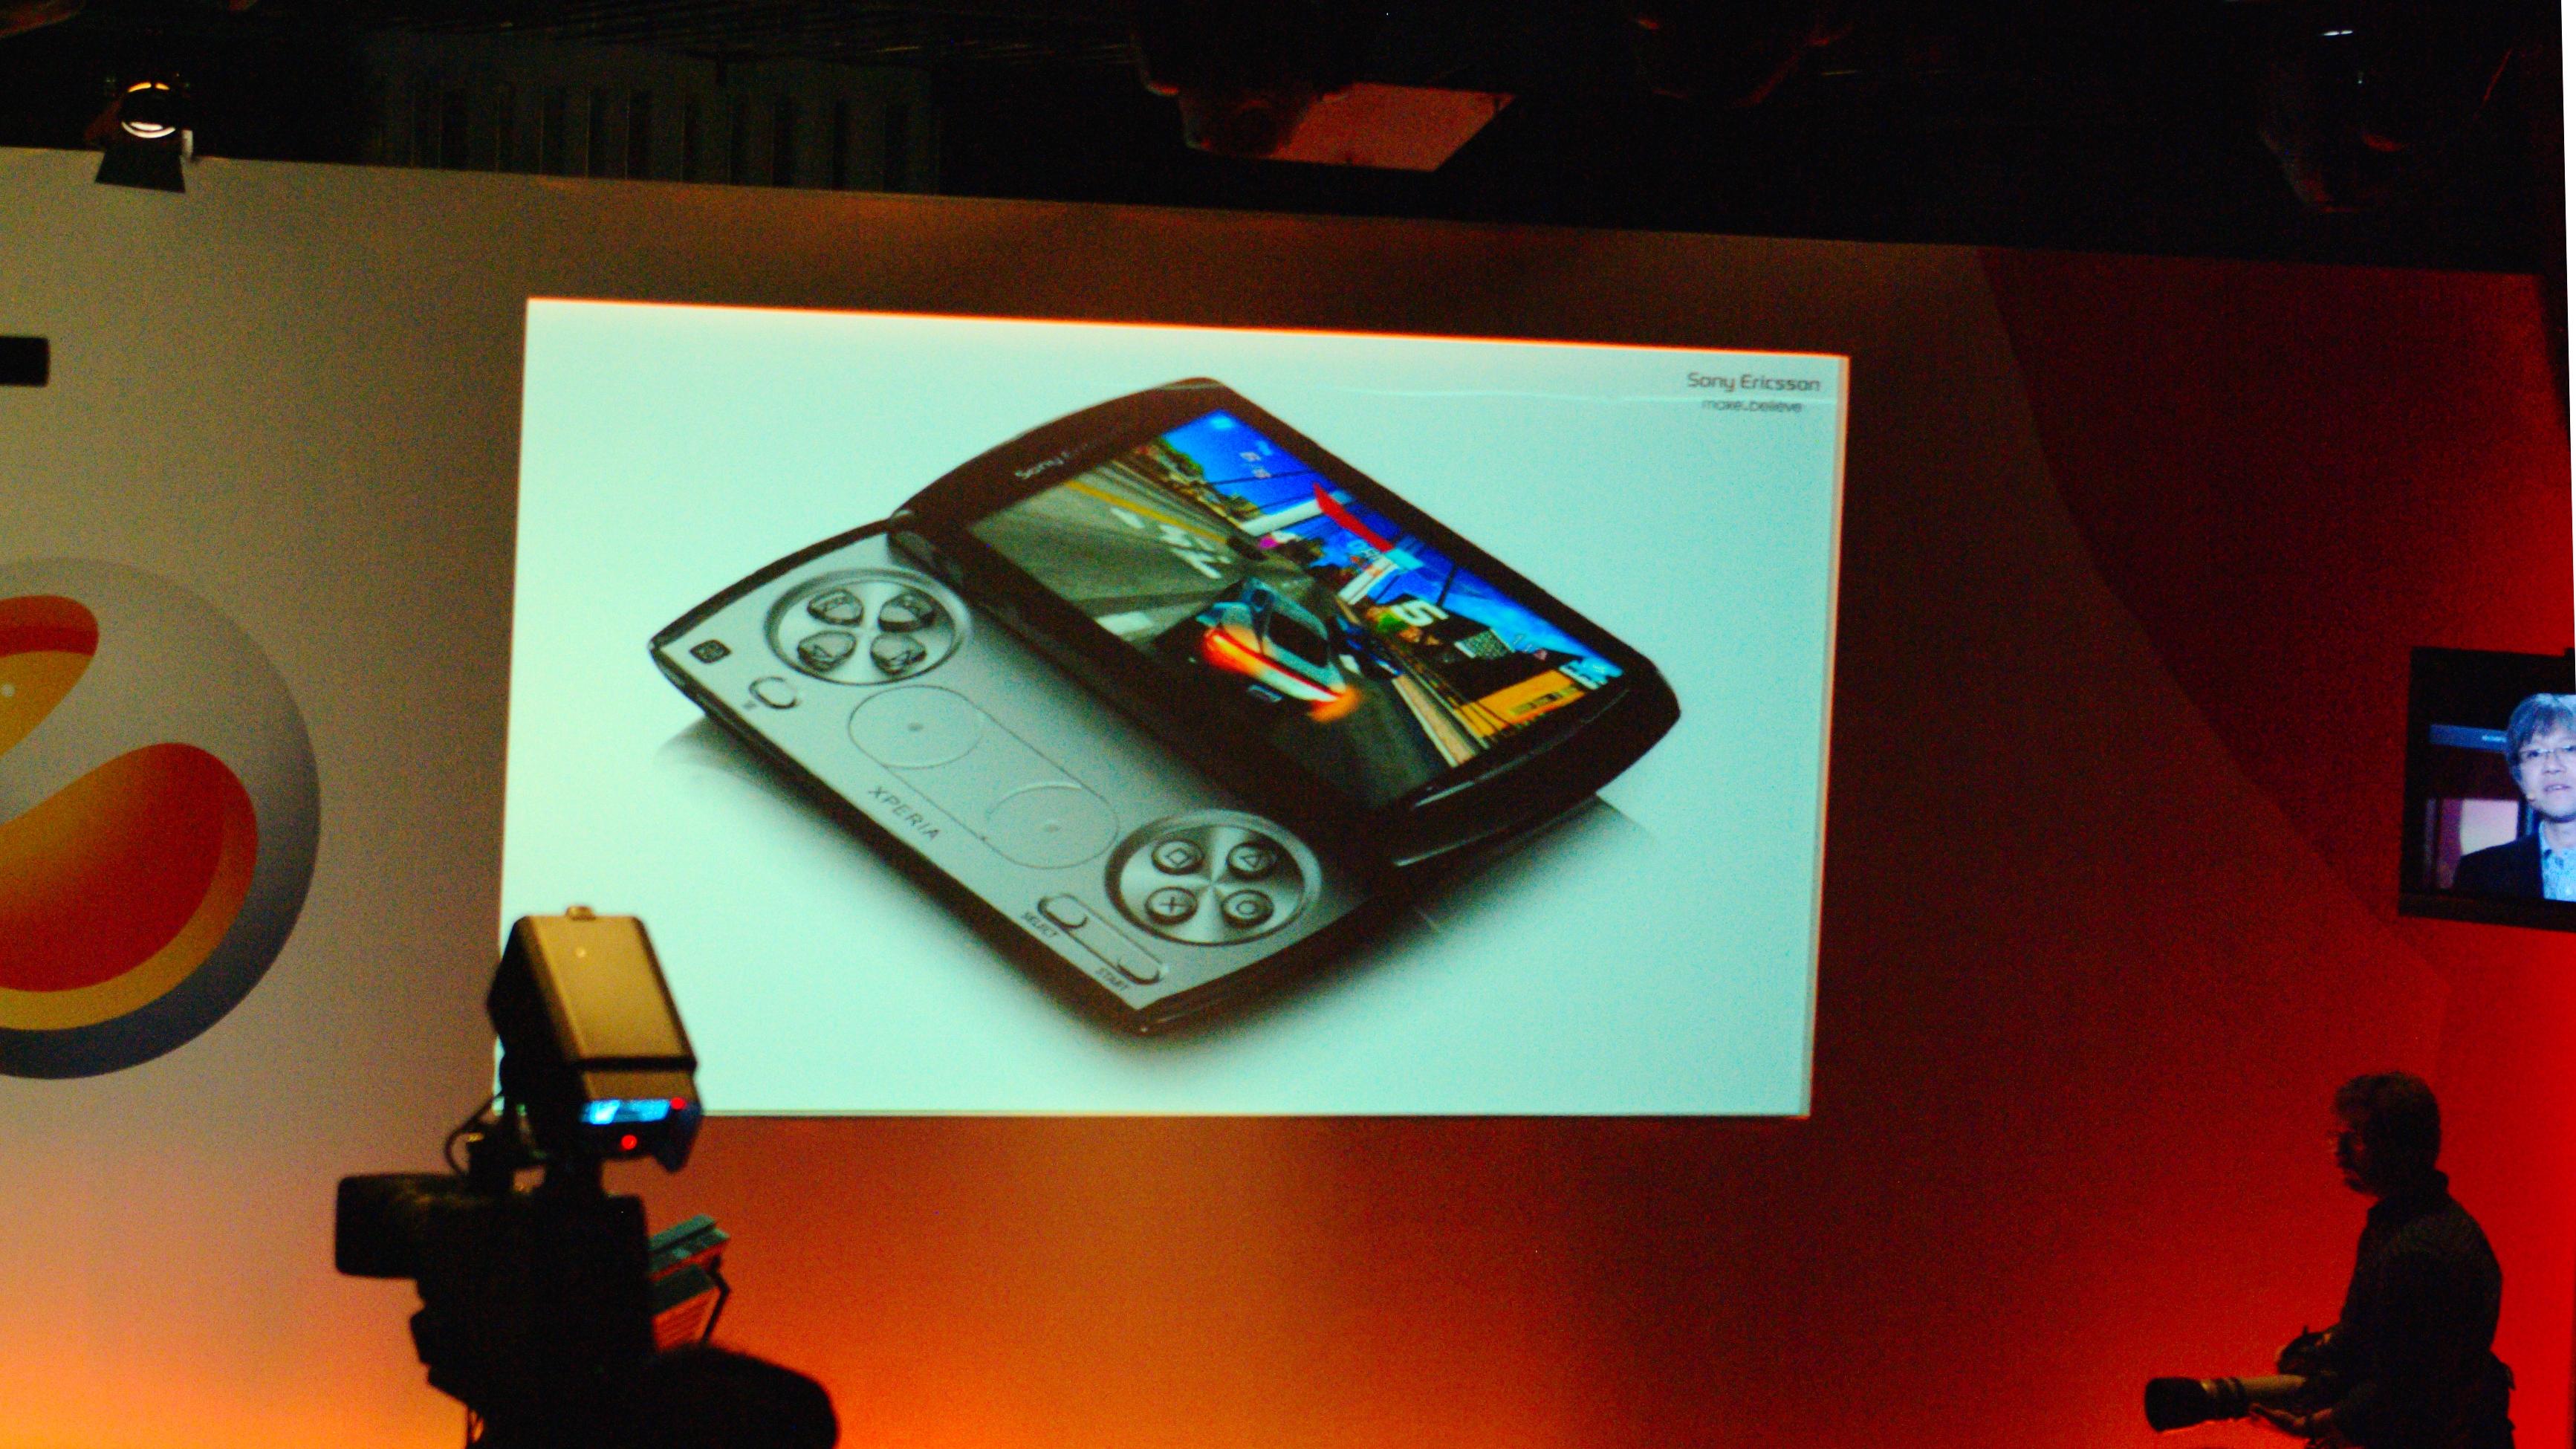 Sony Ericsson lanserer tre nye